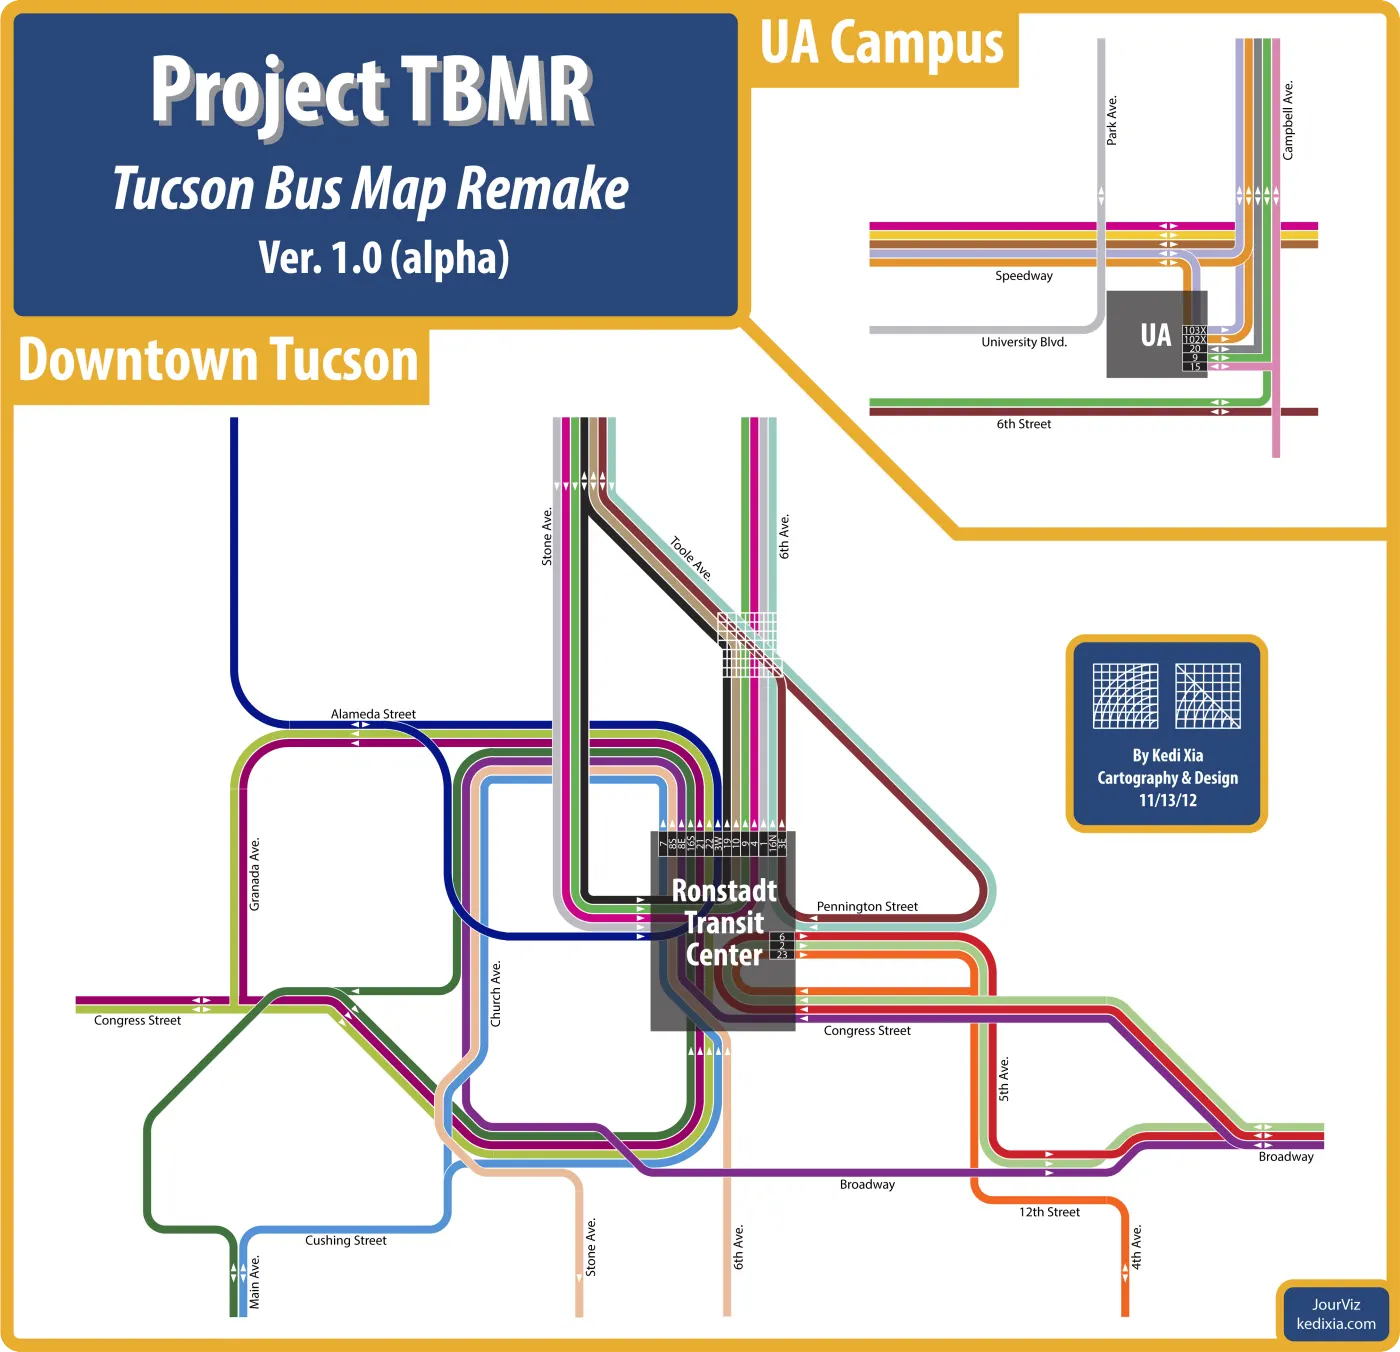 Tucson bus map concept